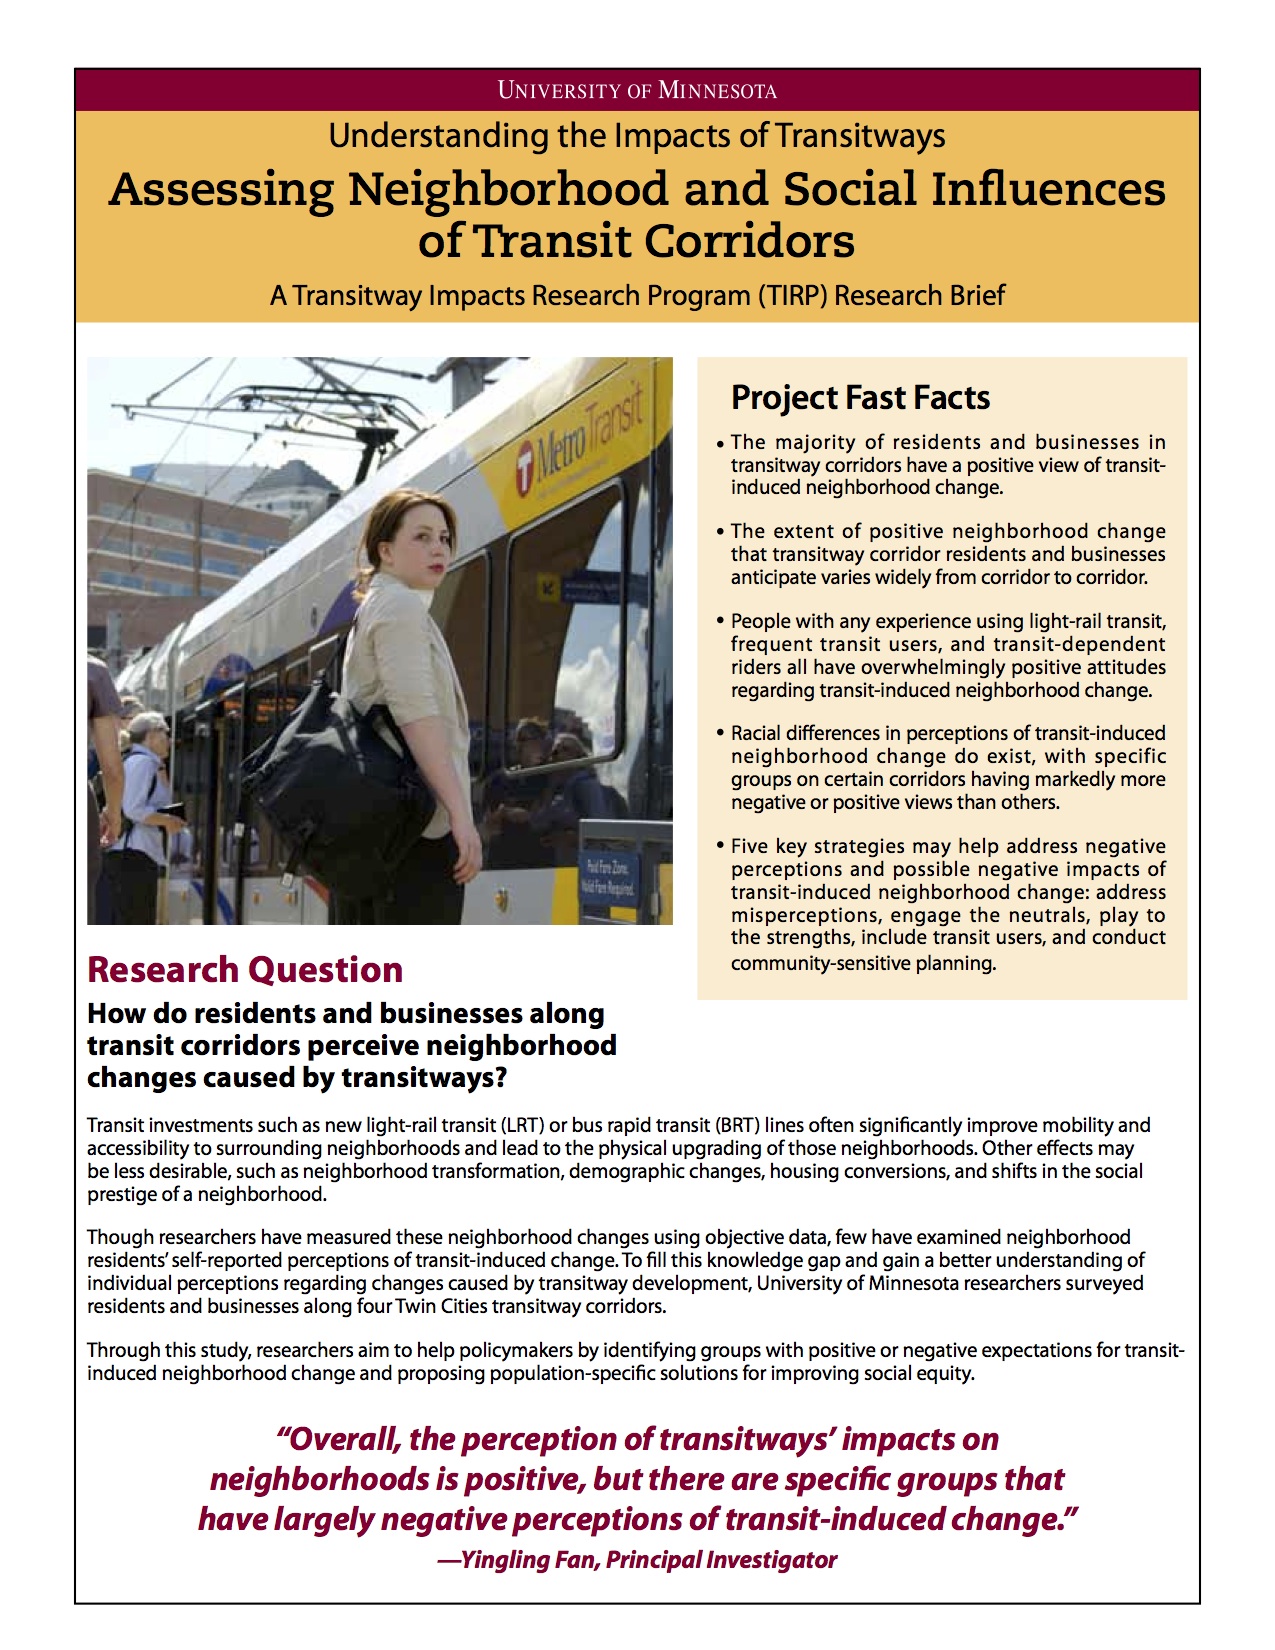 Assessing Neighborhood and Social Influences of Transit Corridors